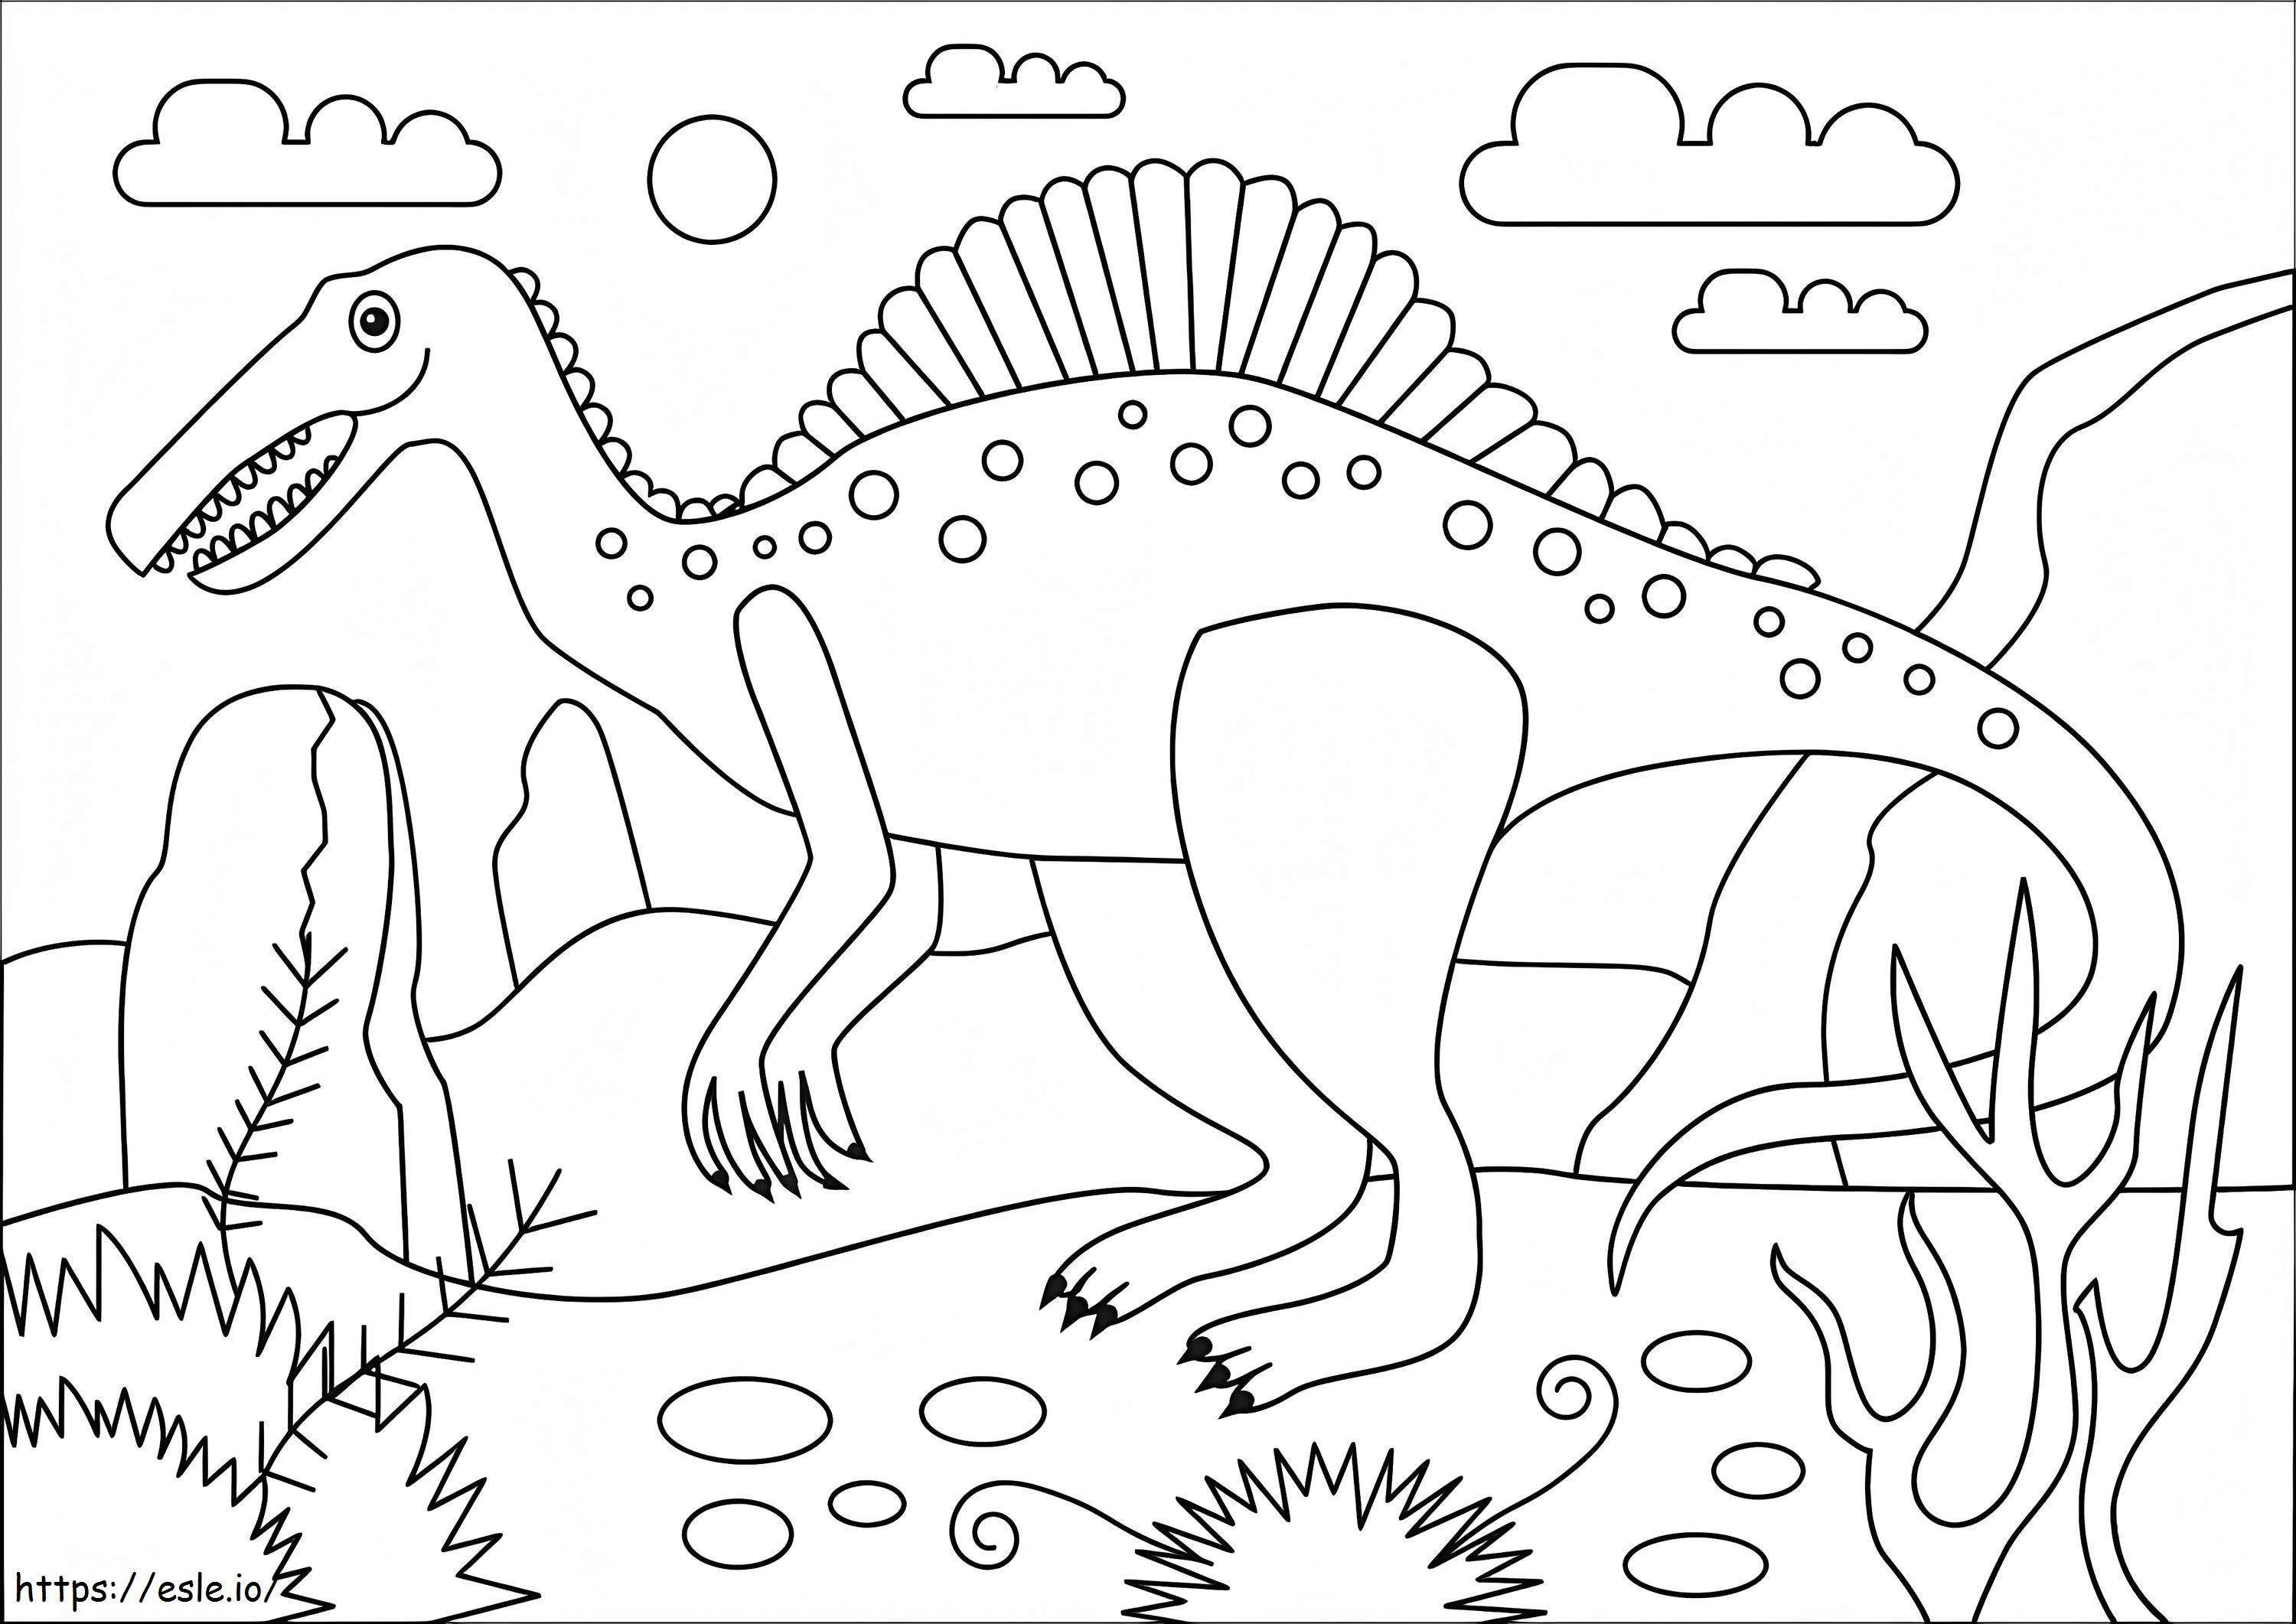 Helppo Spinosaurus värityskuva